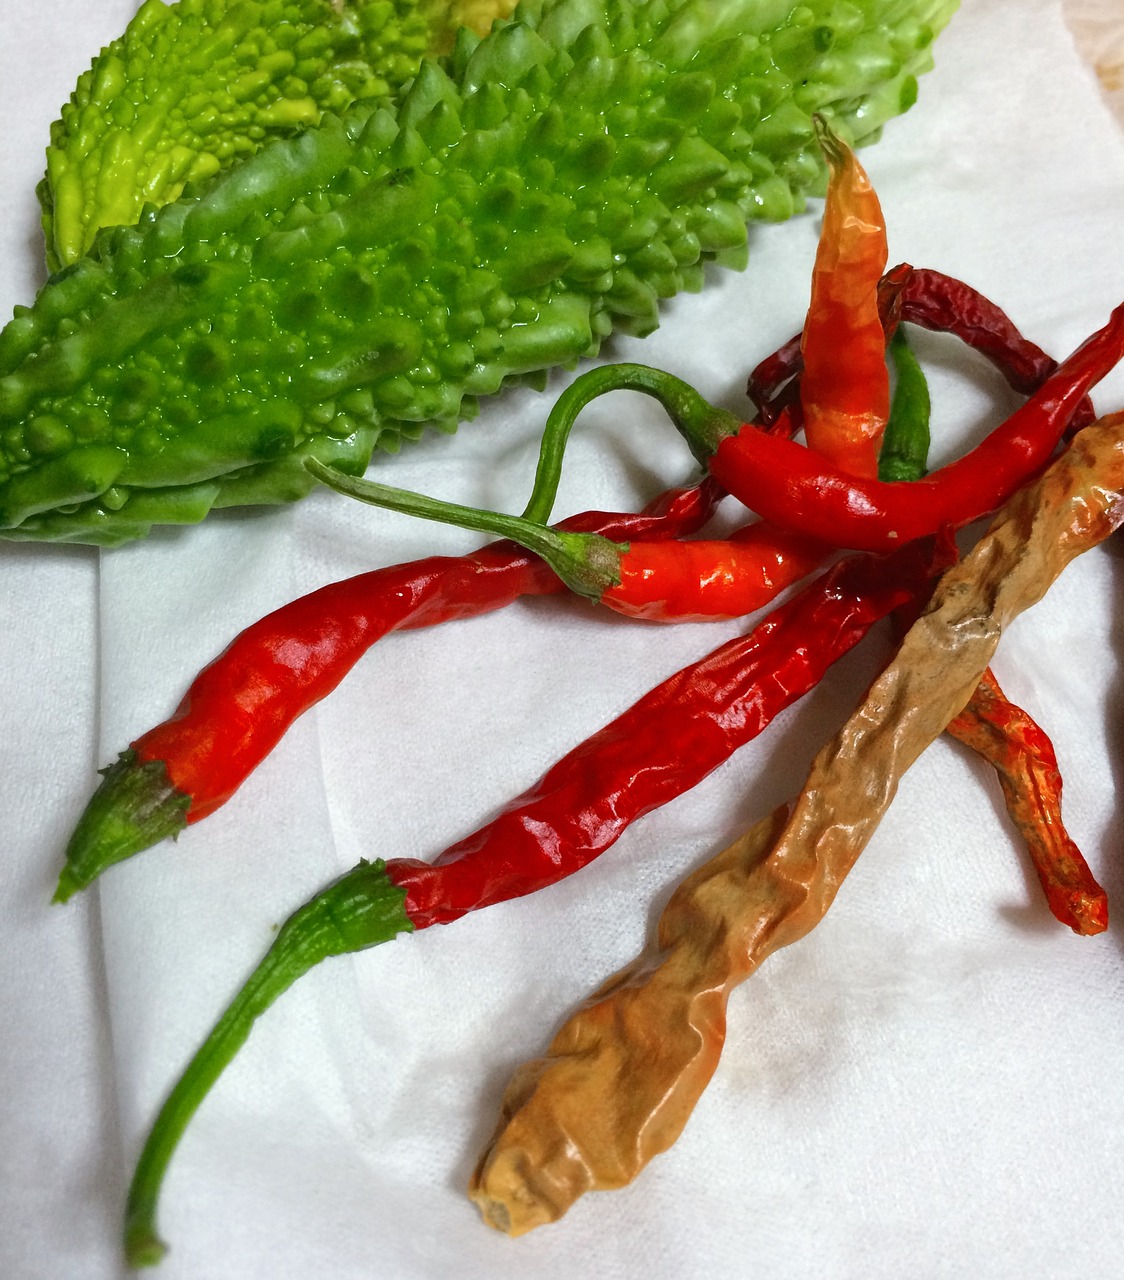 chili pepper gouya vegetables free photo